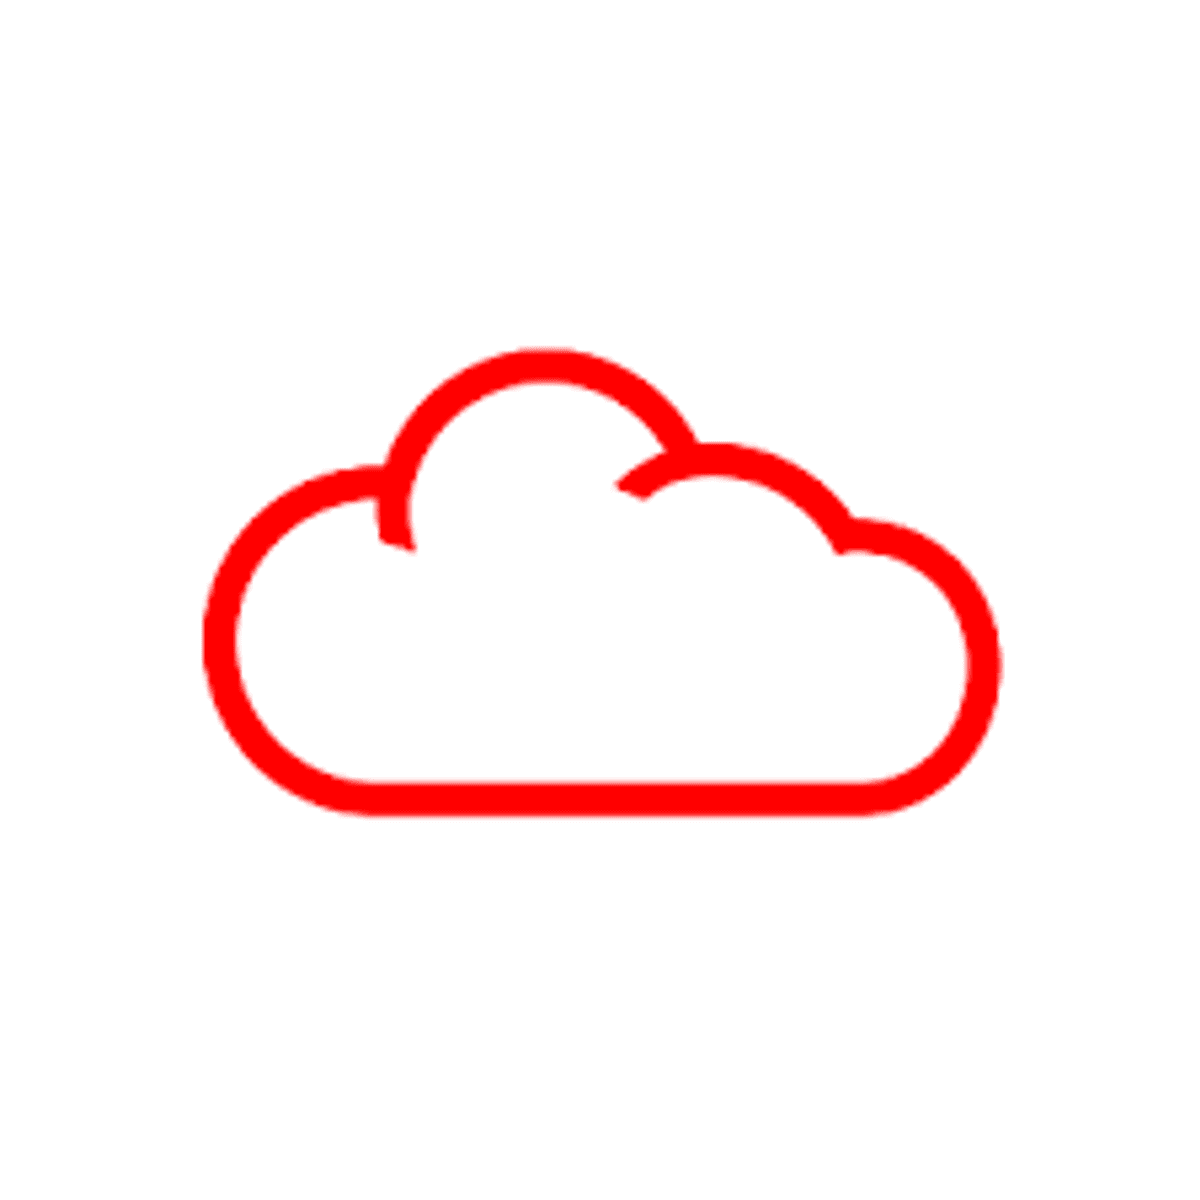 Tech Data voegt Oracle Cloud toe aan StreamOne Cloud Marketplace image